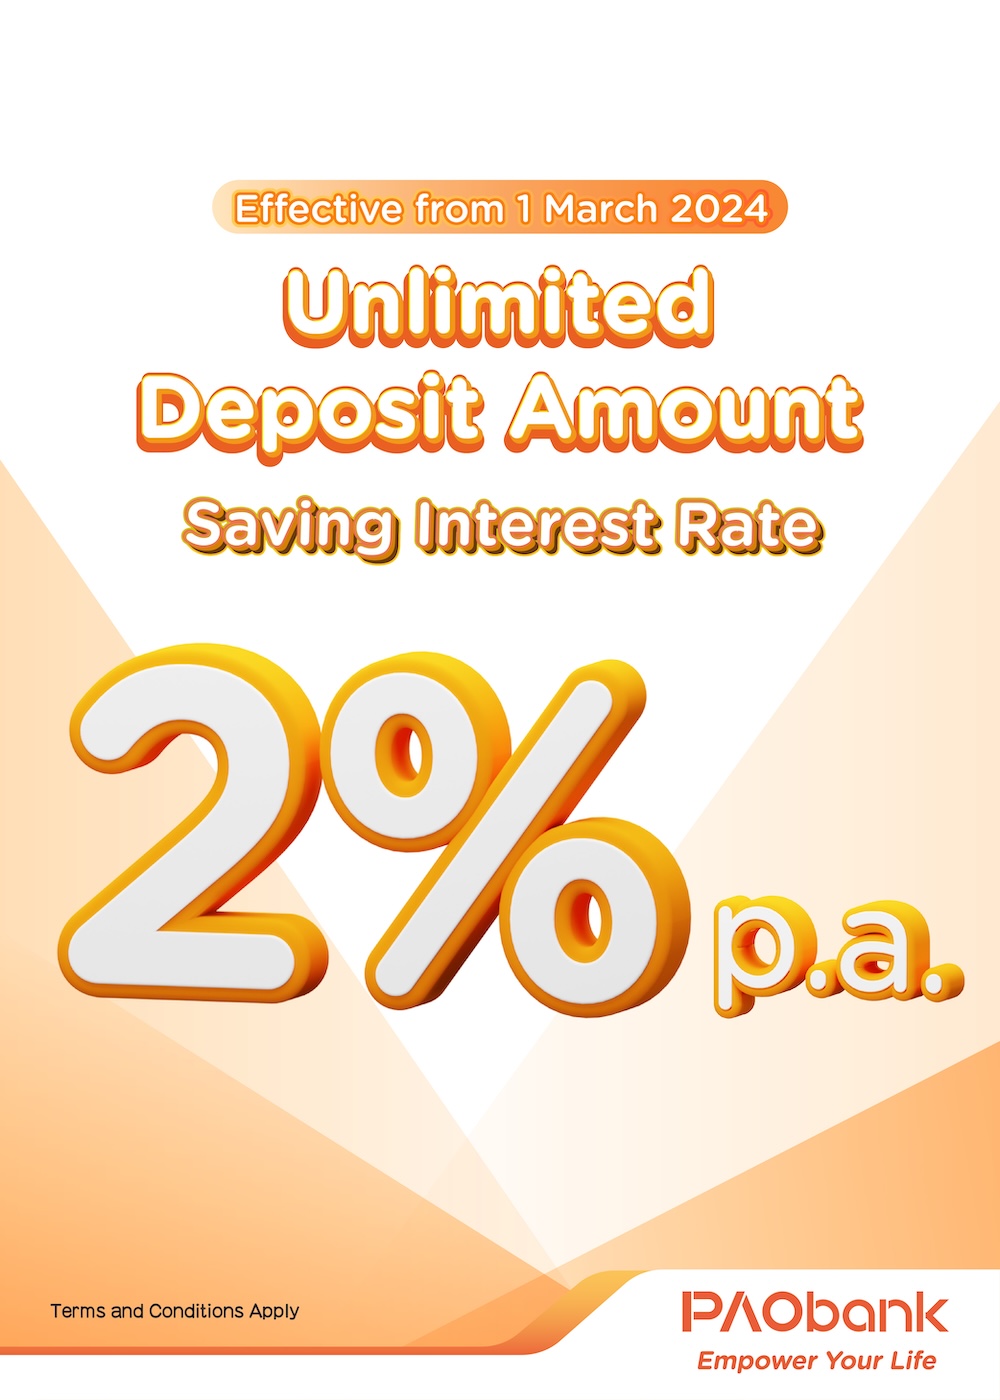 PAOB - Unlimited Deposit Amount